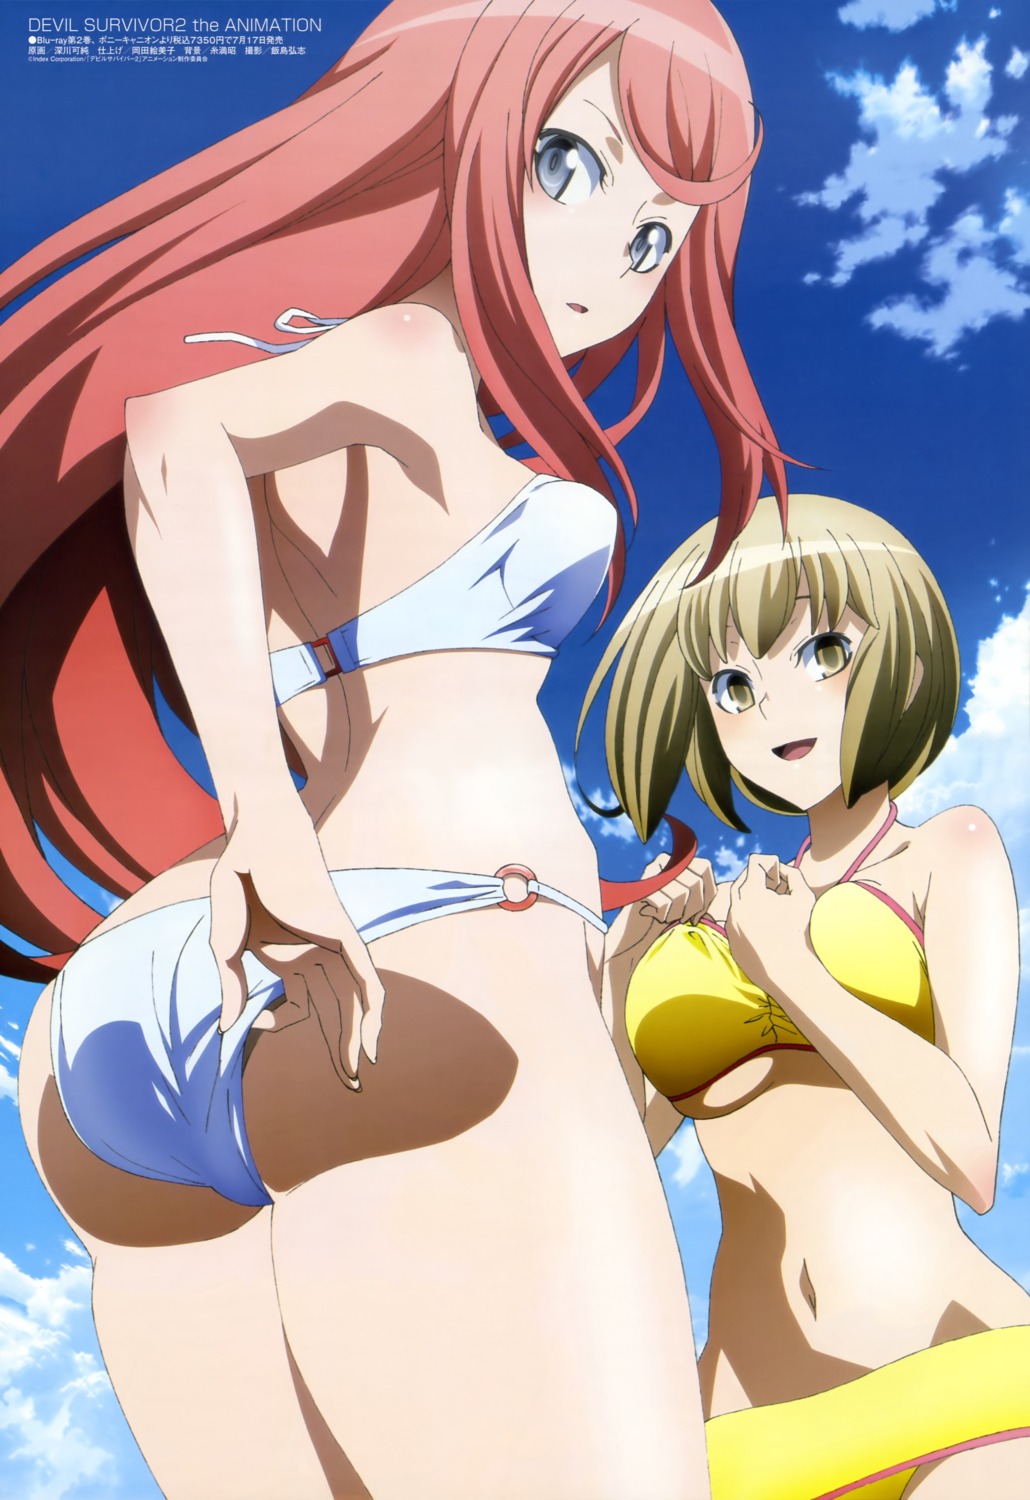 ass ban_airi bikini breast_hold fukagawa_kazumi megaten nitta_io shin_megami_tensei shin_megami_tensei_devil_survivor_2_the_animation swimsuits underboob